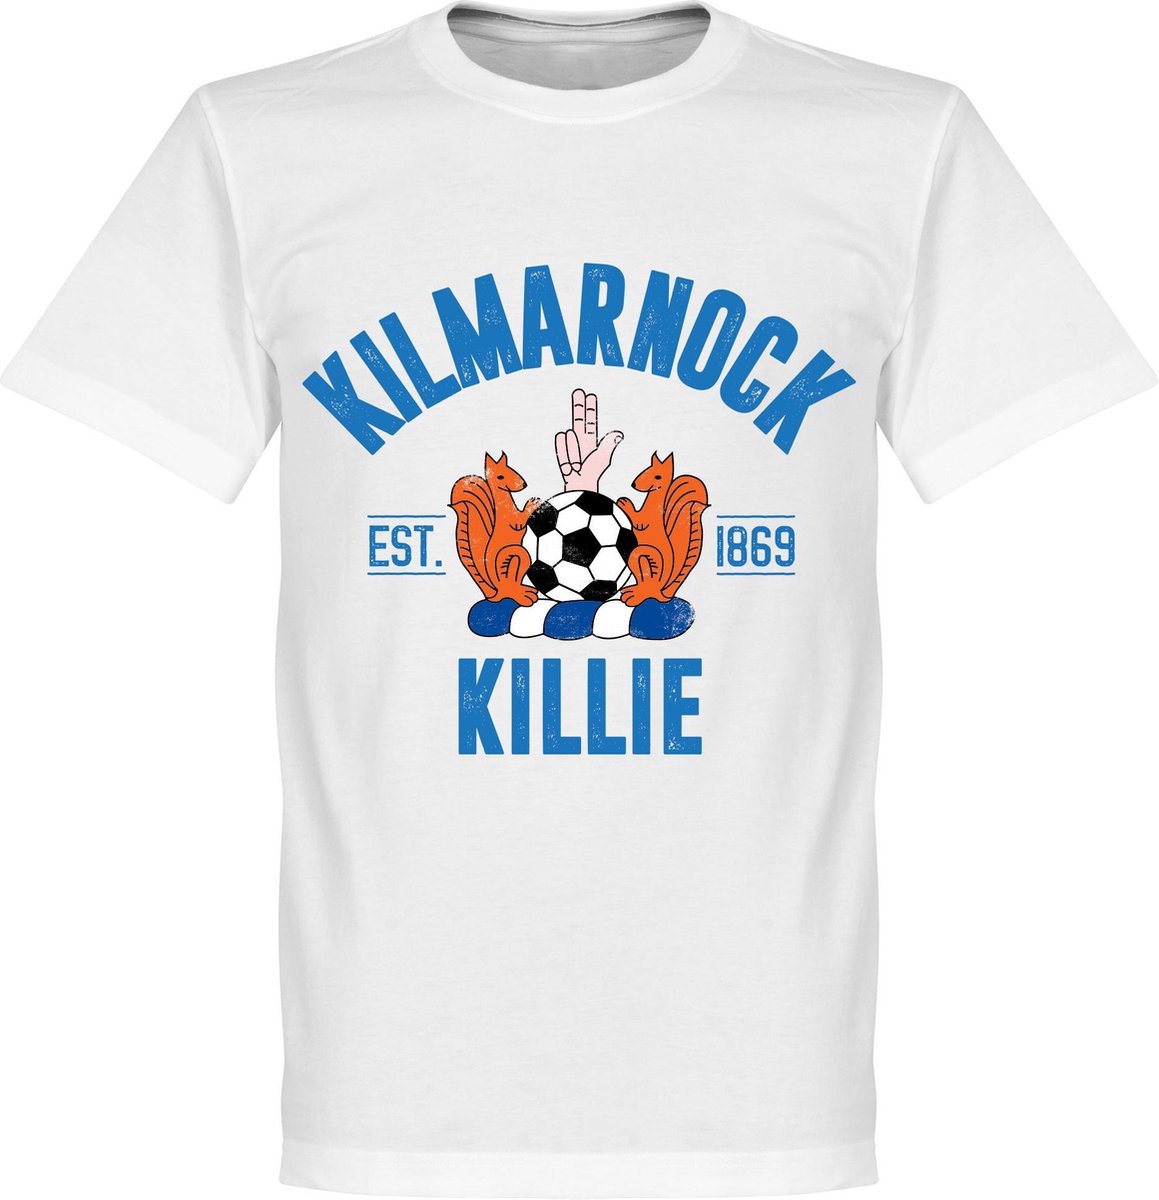 Kilmarnock Established T-Shirt - Wit - XXXL